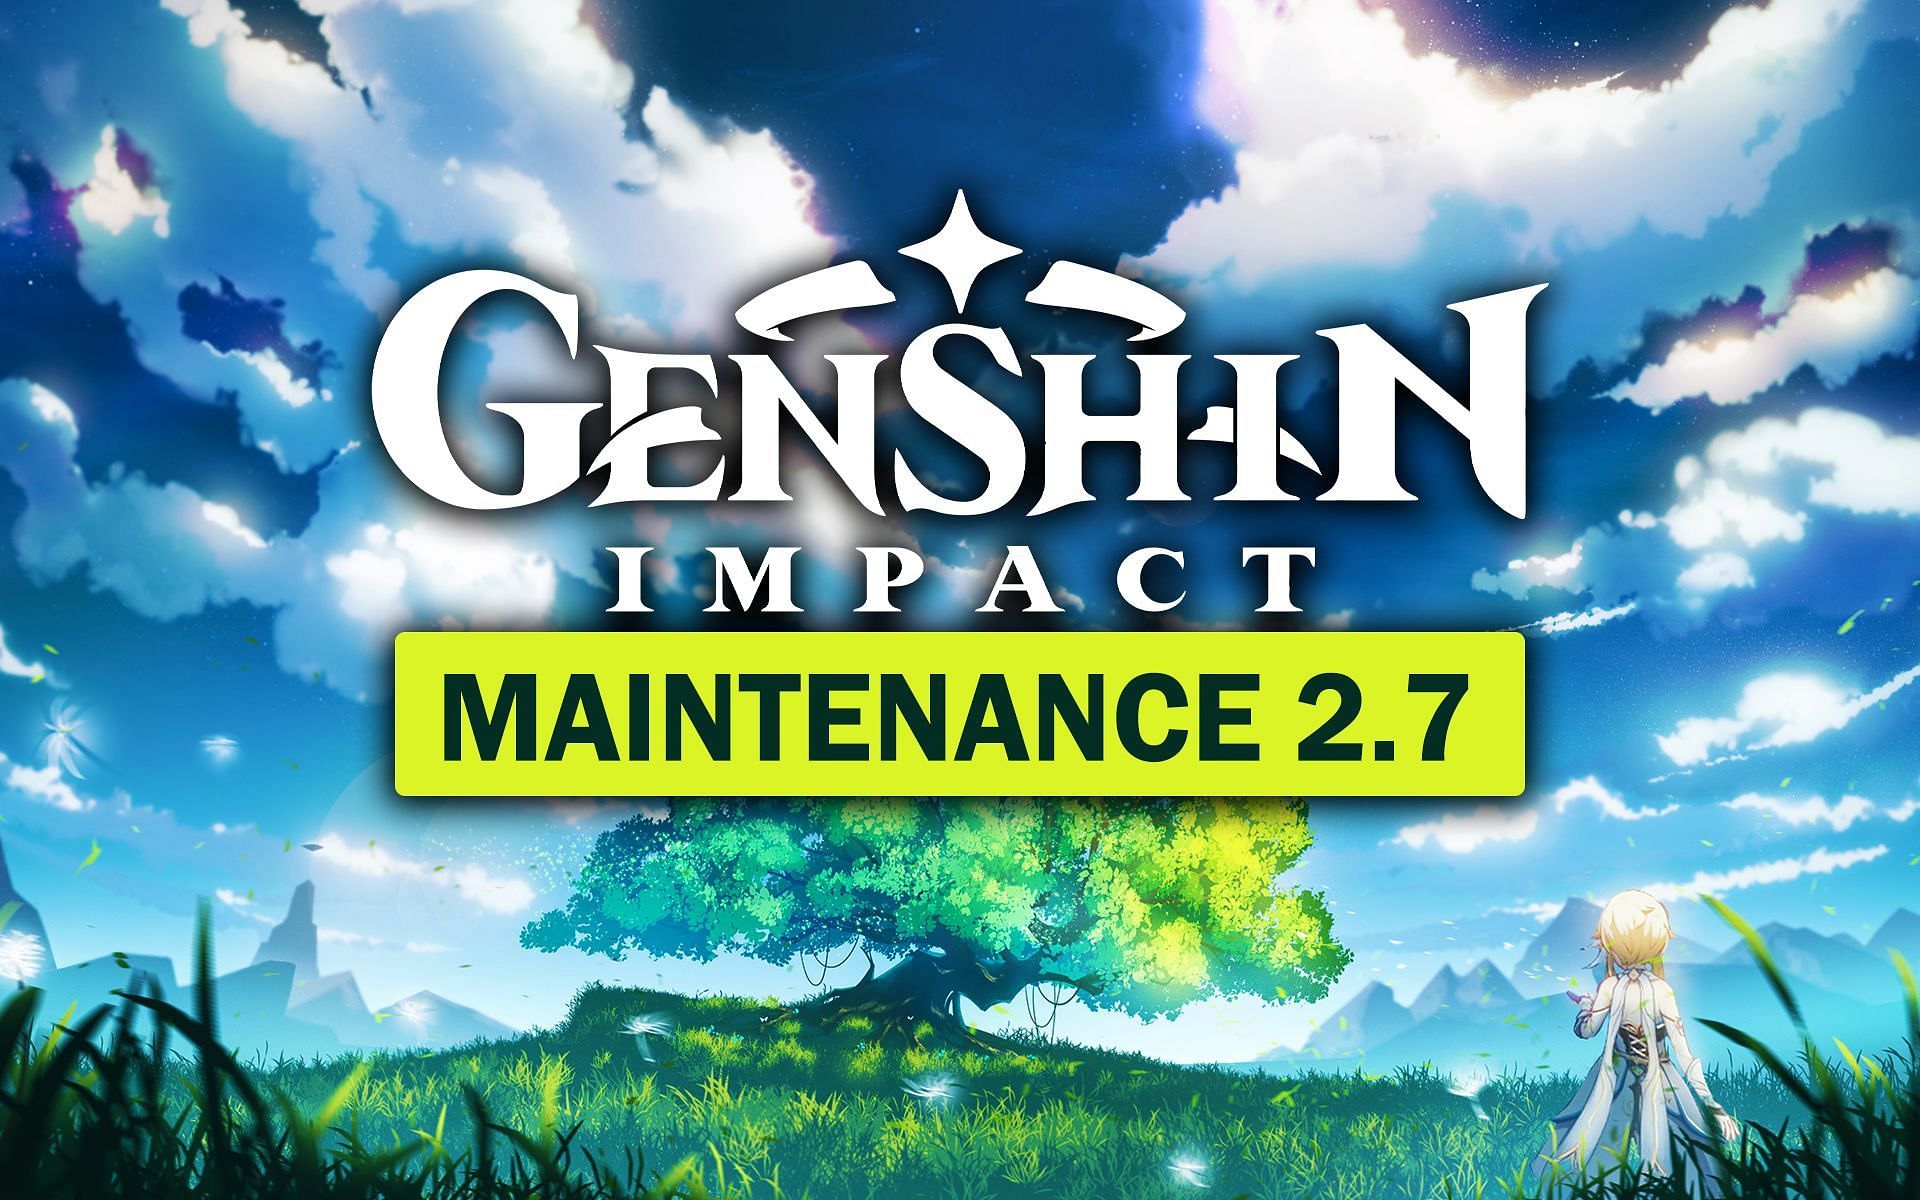 Genshin Impact 2.7 maintenance details (Image via HoYoverse)